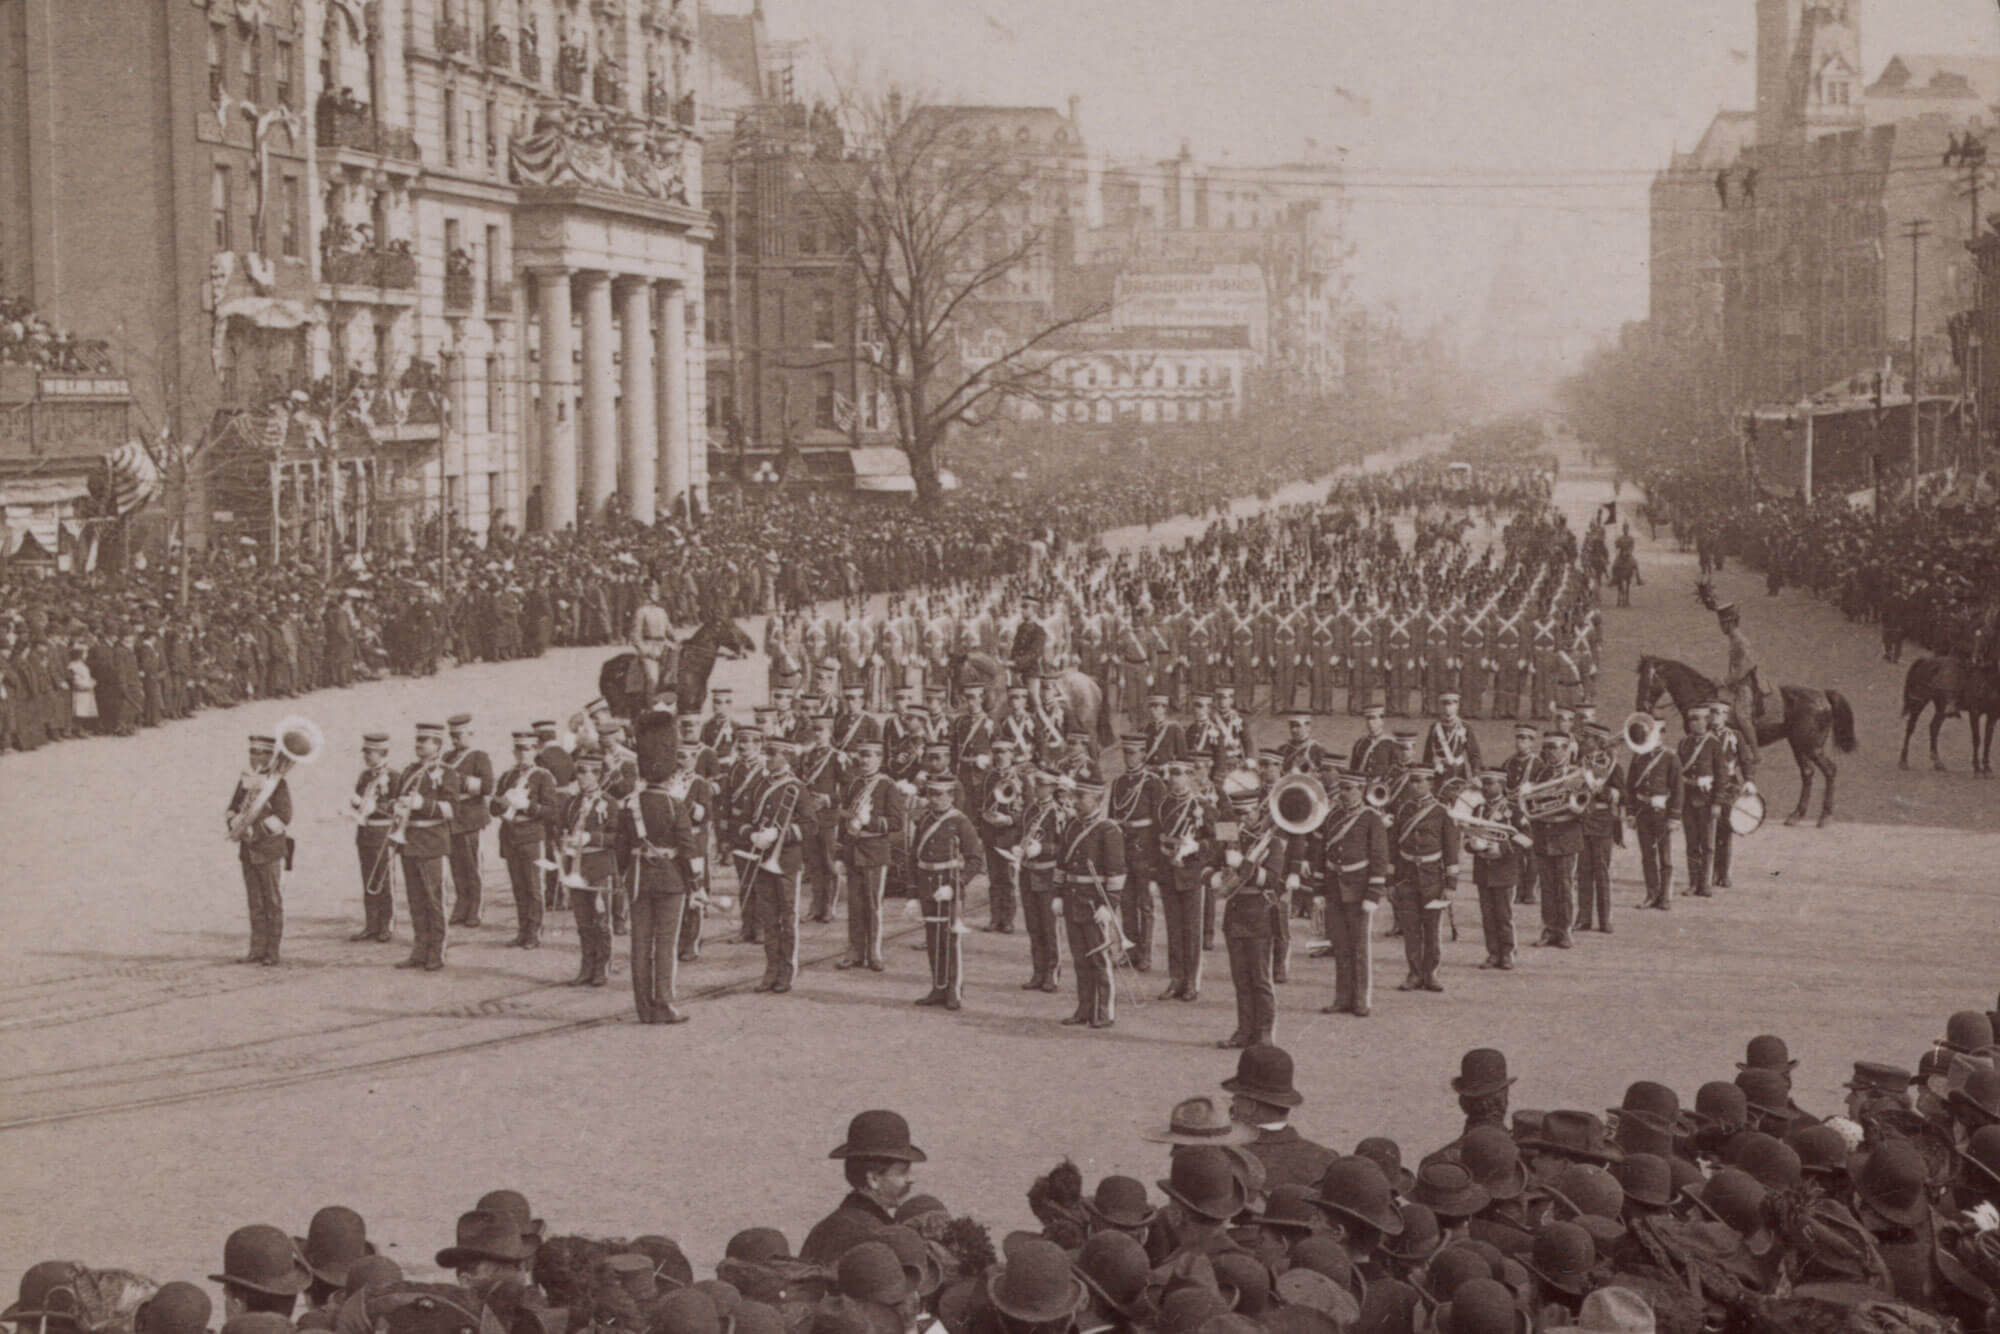 inaugural parade and band on Pennsylvania Avenue, Washington, DC